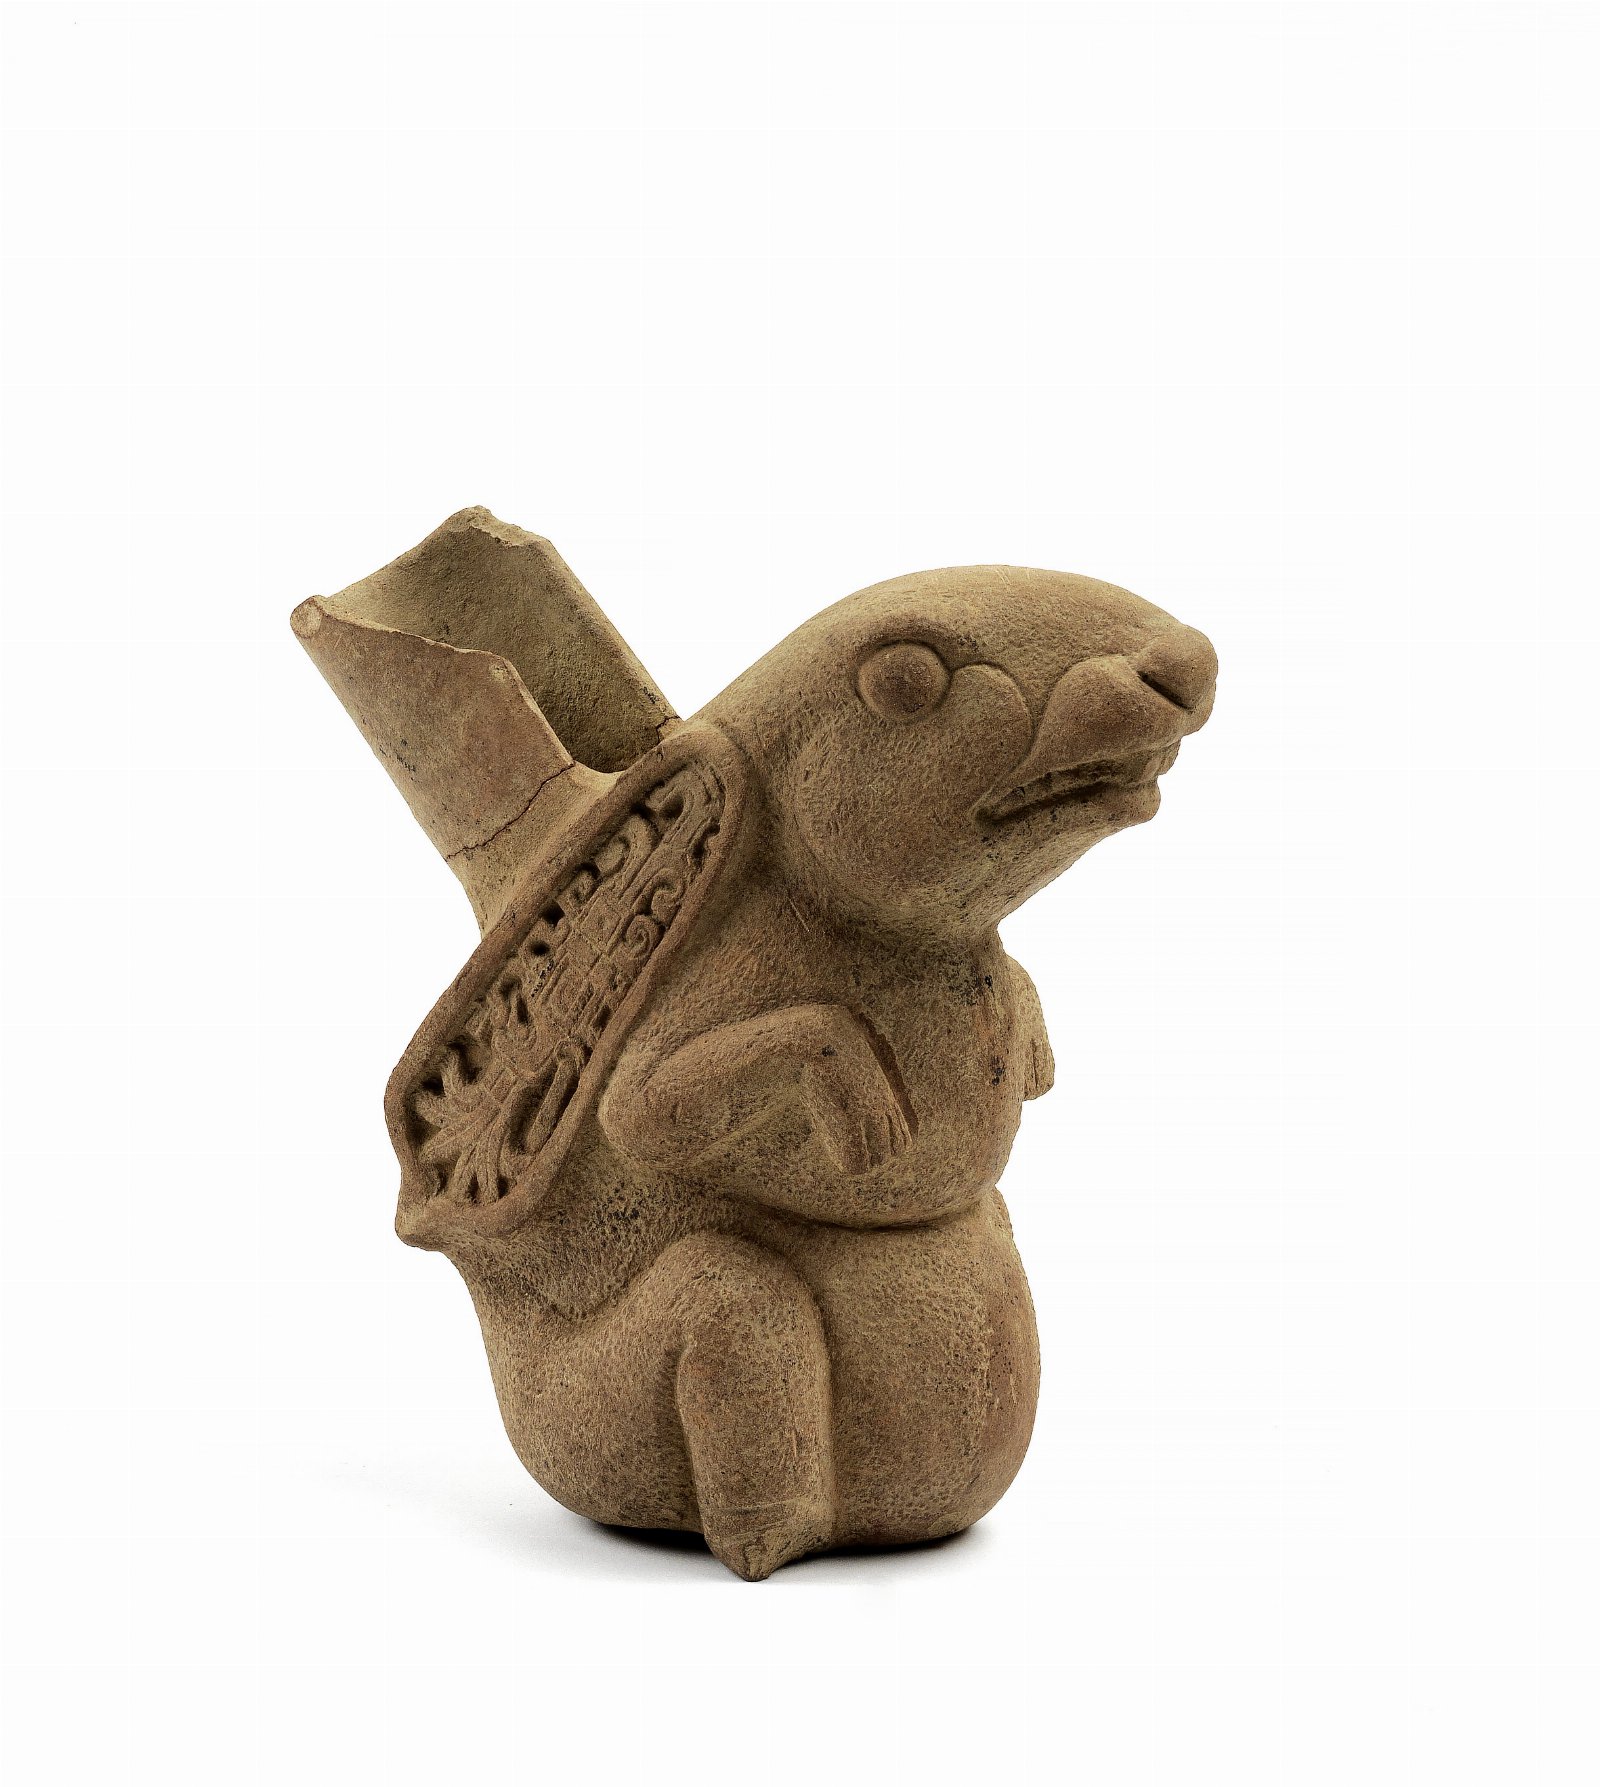 Spouted ceramic rabbit effigy vessel. Veracruz, Mexico, Classic period, ca. 600-900 AD. Penn Museum collection.jpg